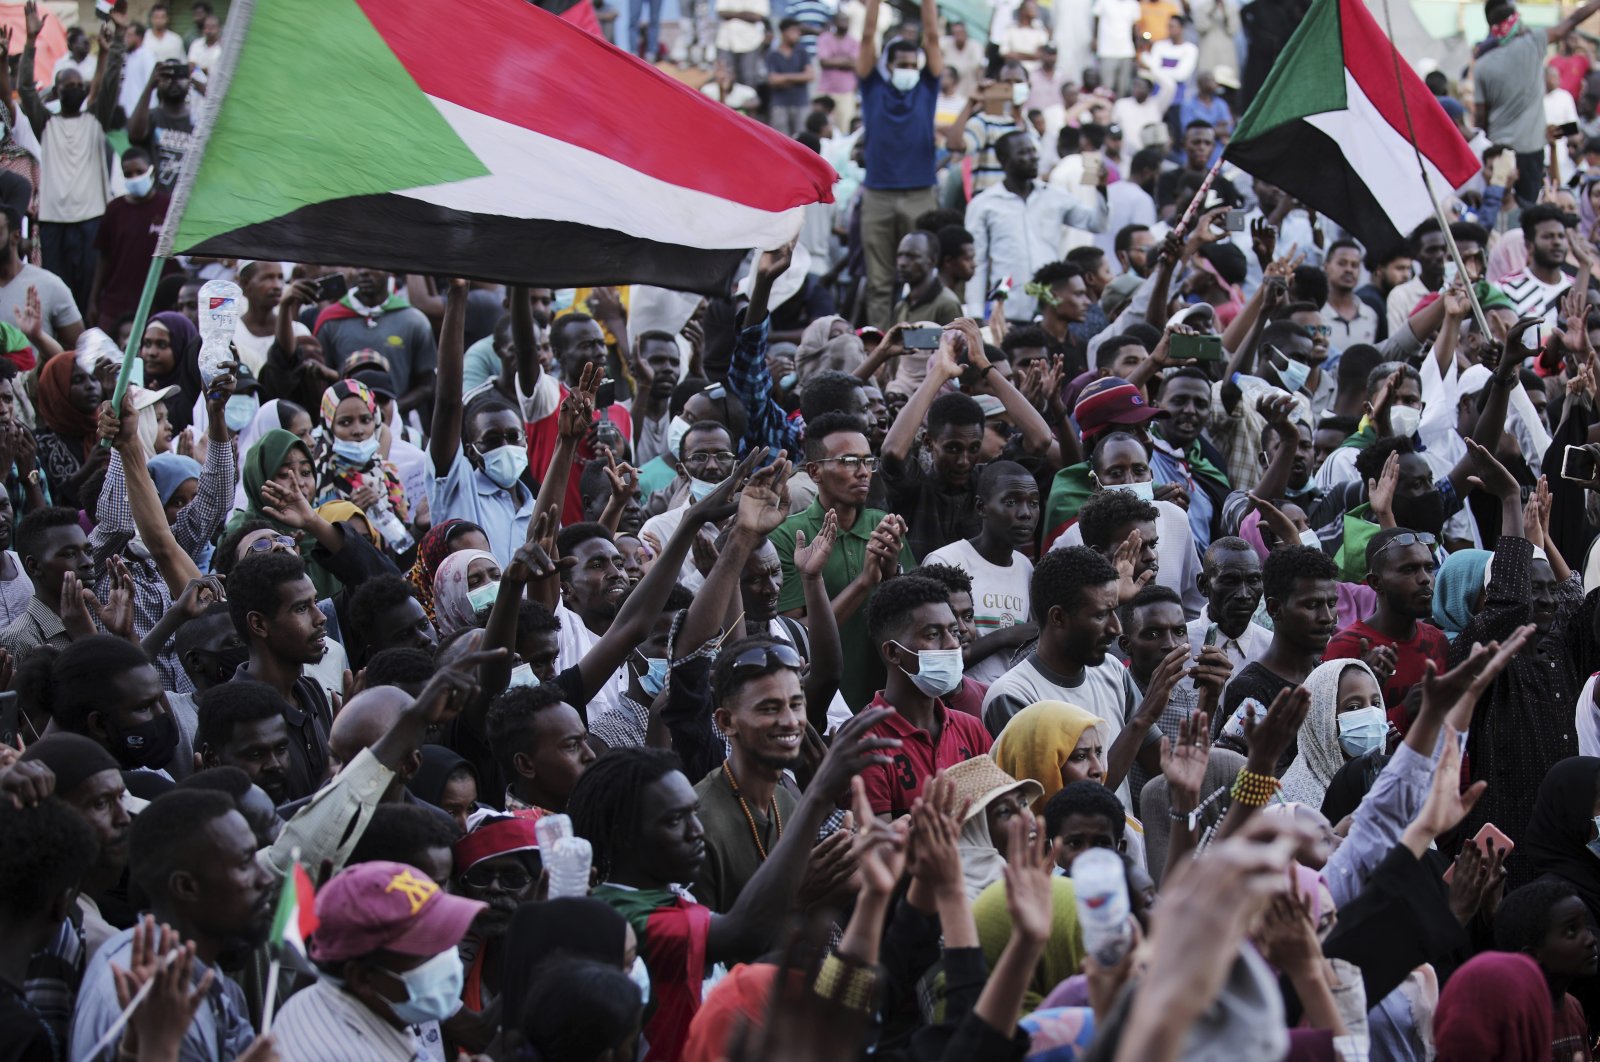 People chant slogans during a protest in Khartoum, Sudan, Oct. 30, 2021. (AP Photo)